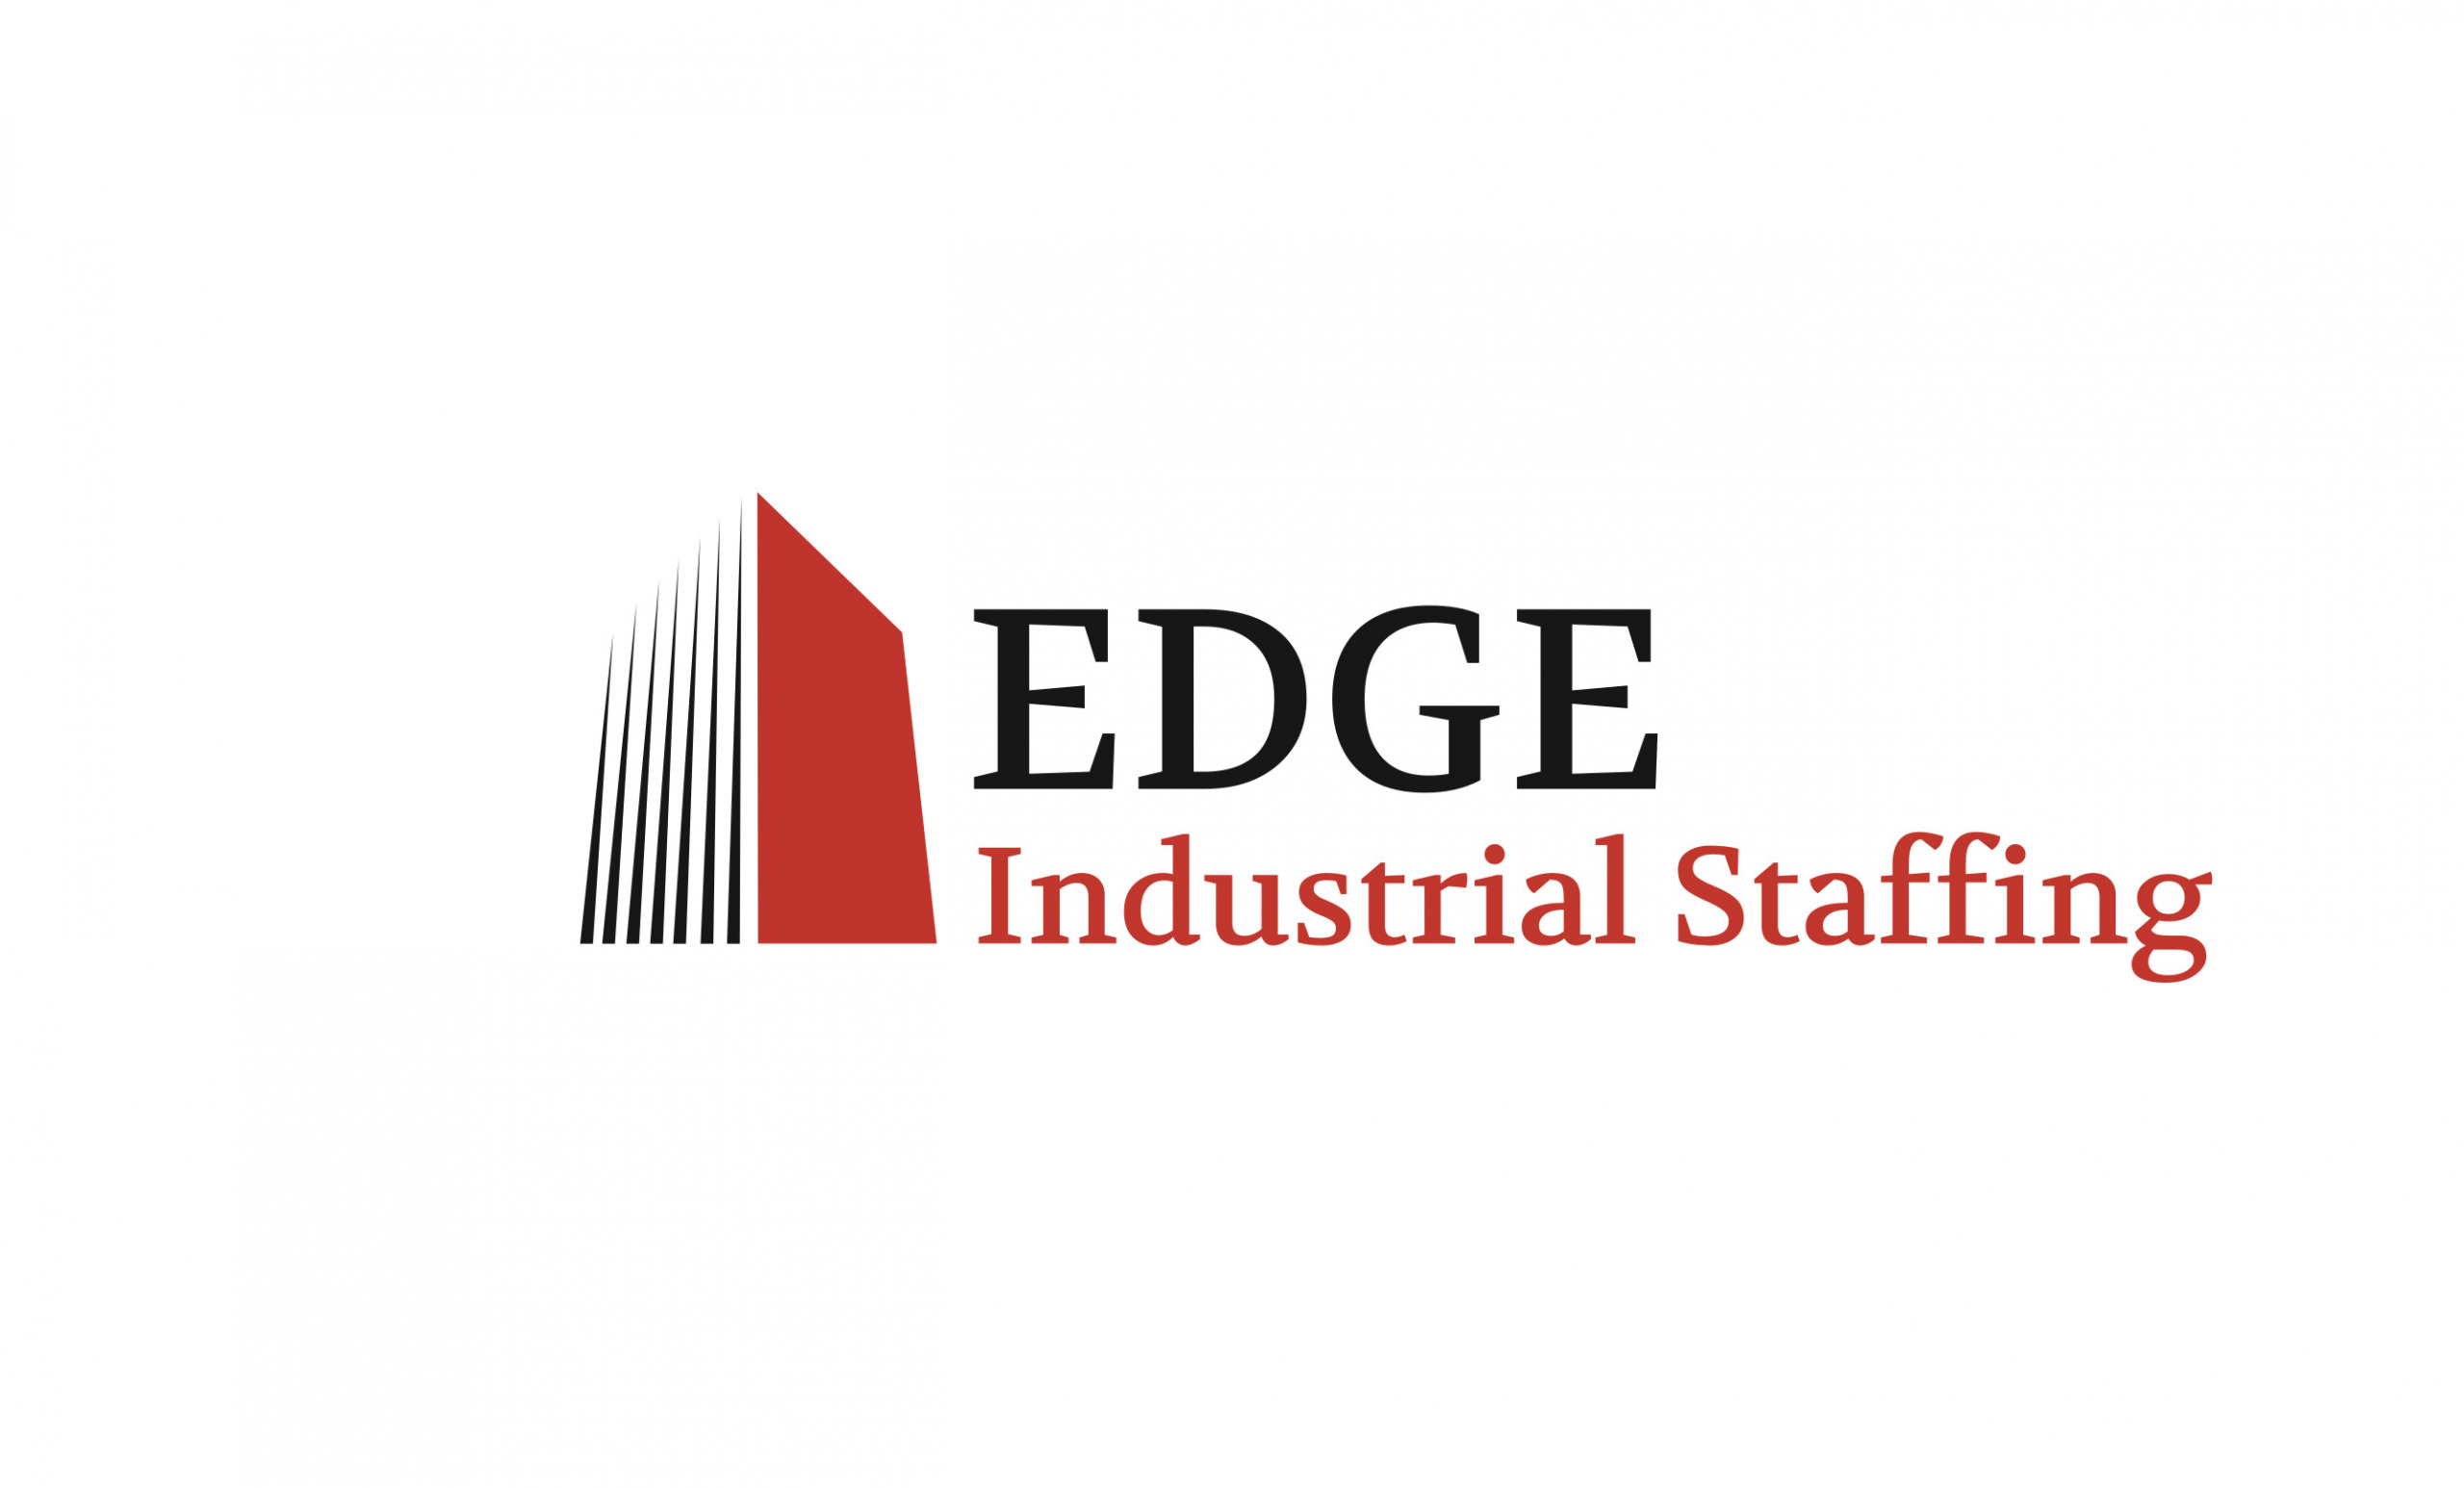 Edge Industrial Staffing